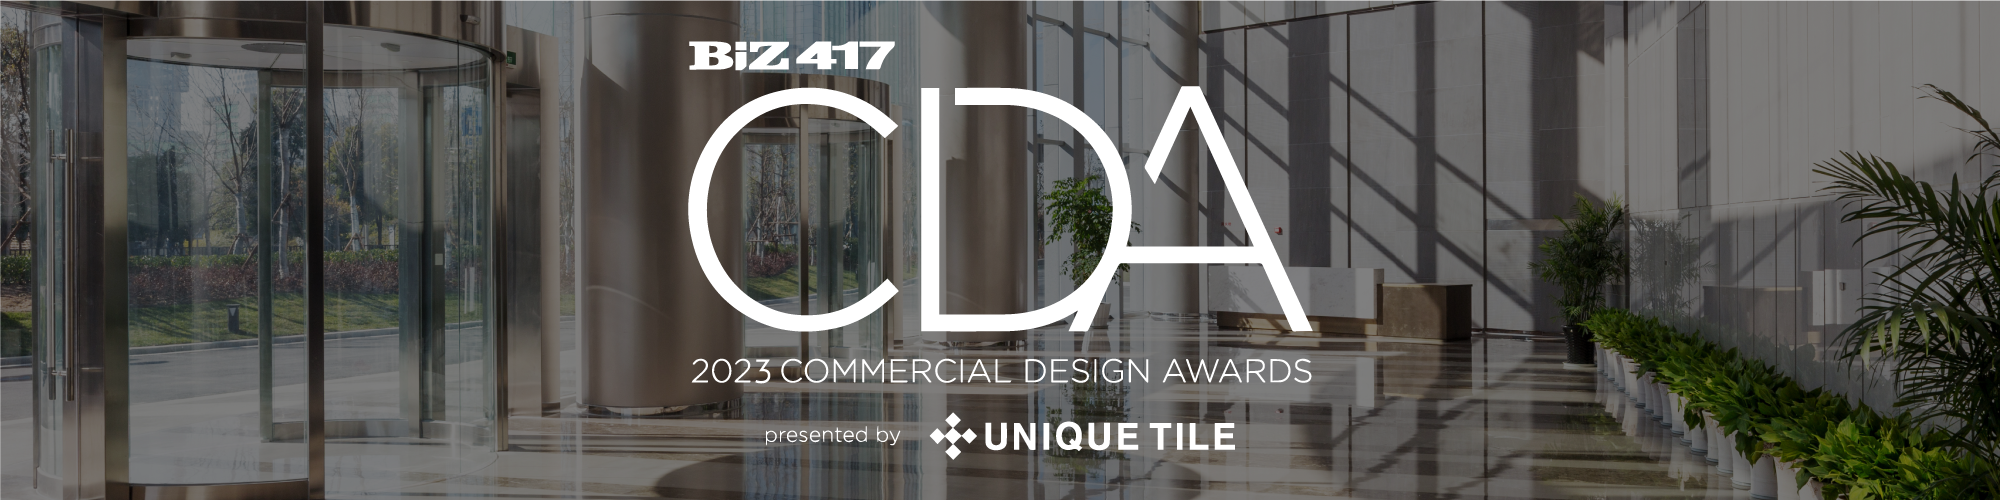 Biz 417 Commercial Design Awards